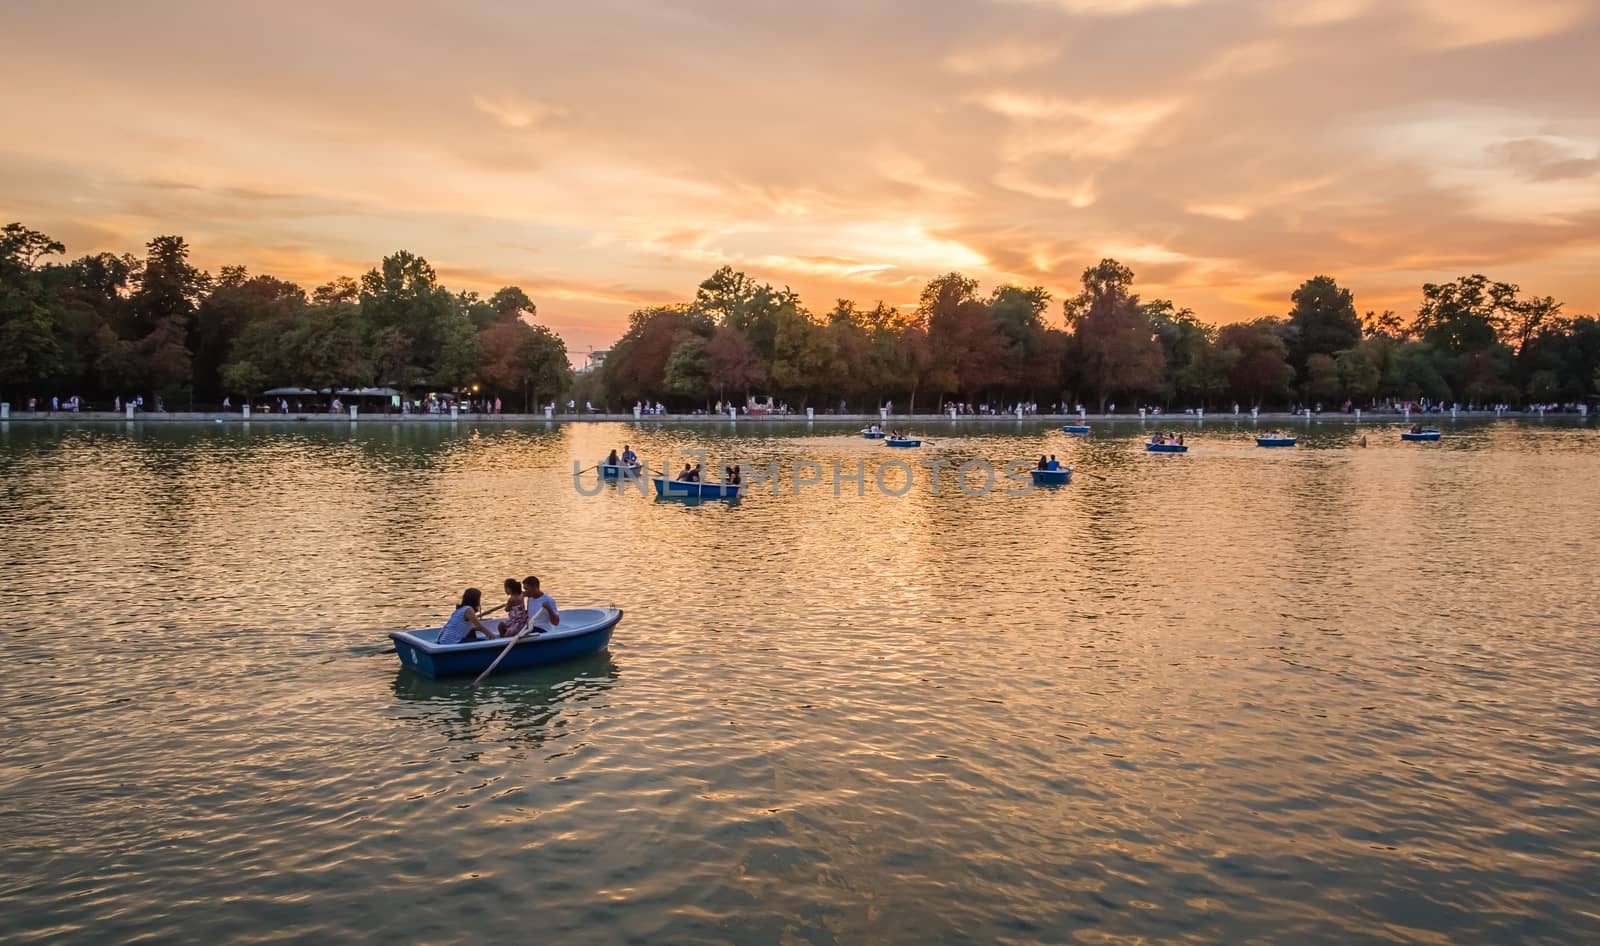 People boating at the sunset in Buen Retiro park lake, Madrid